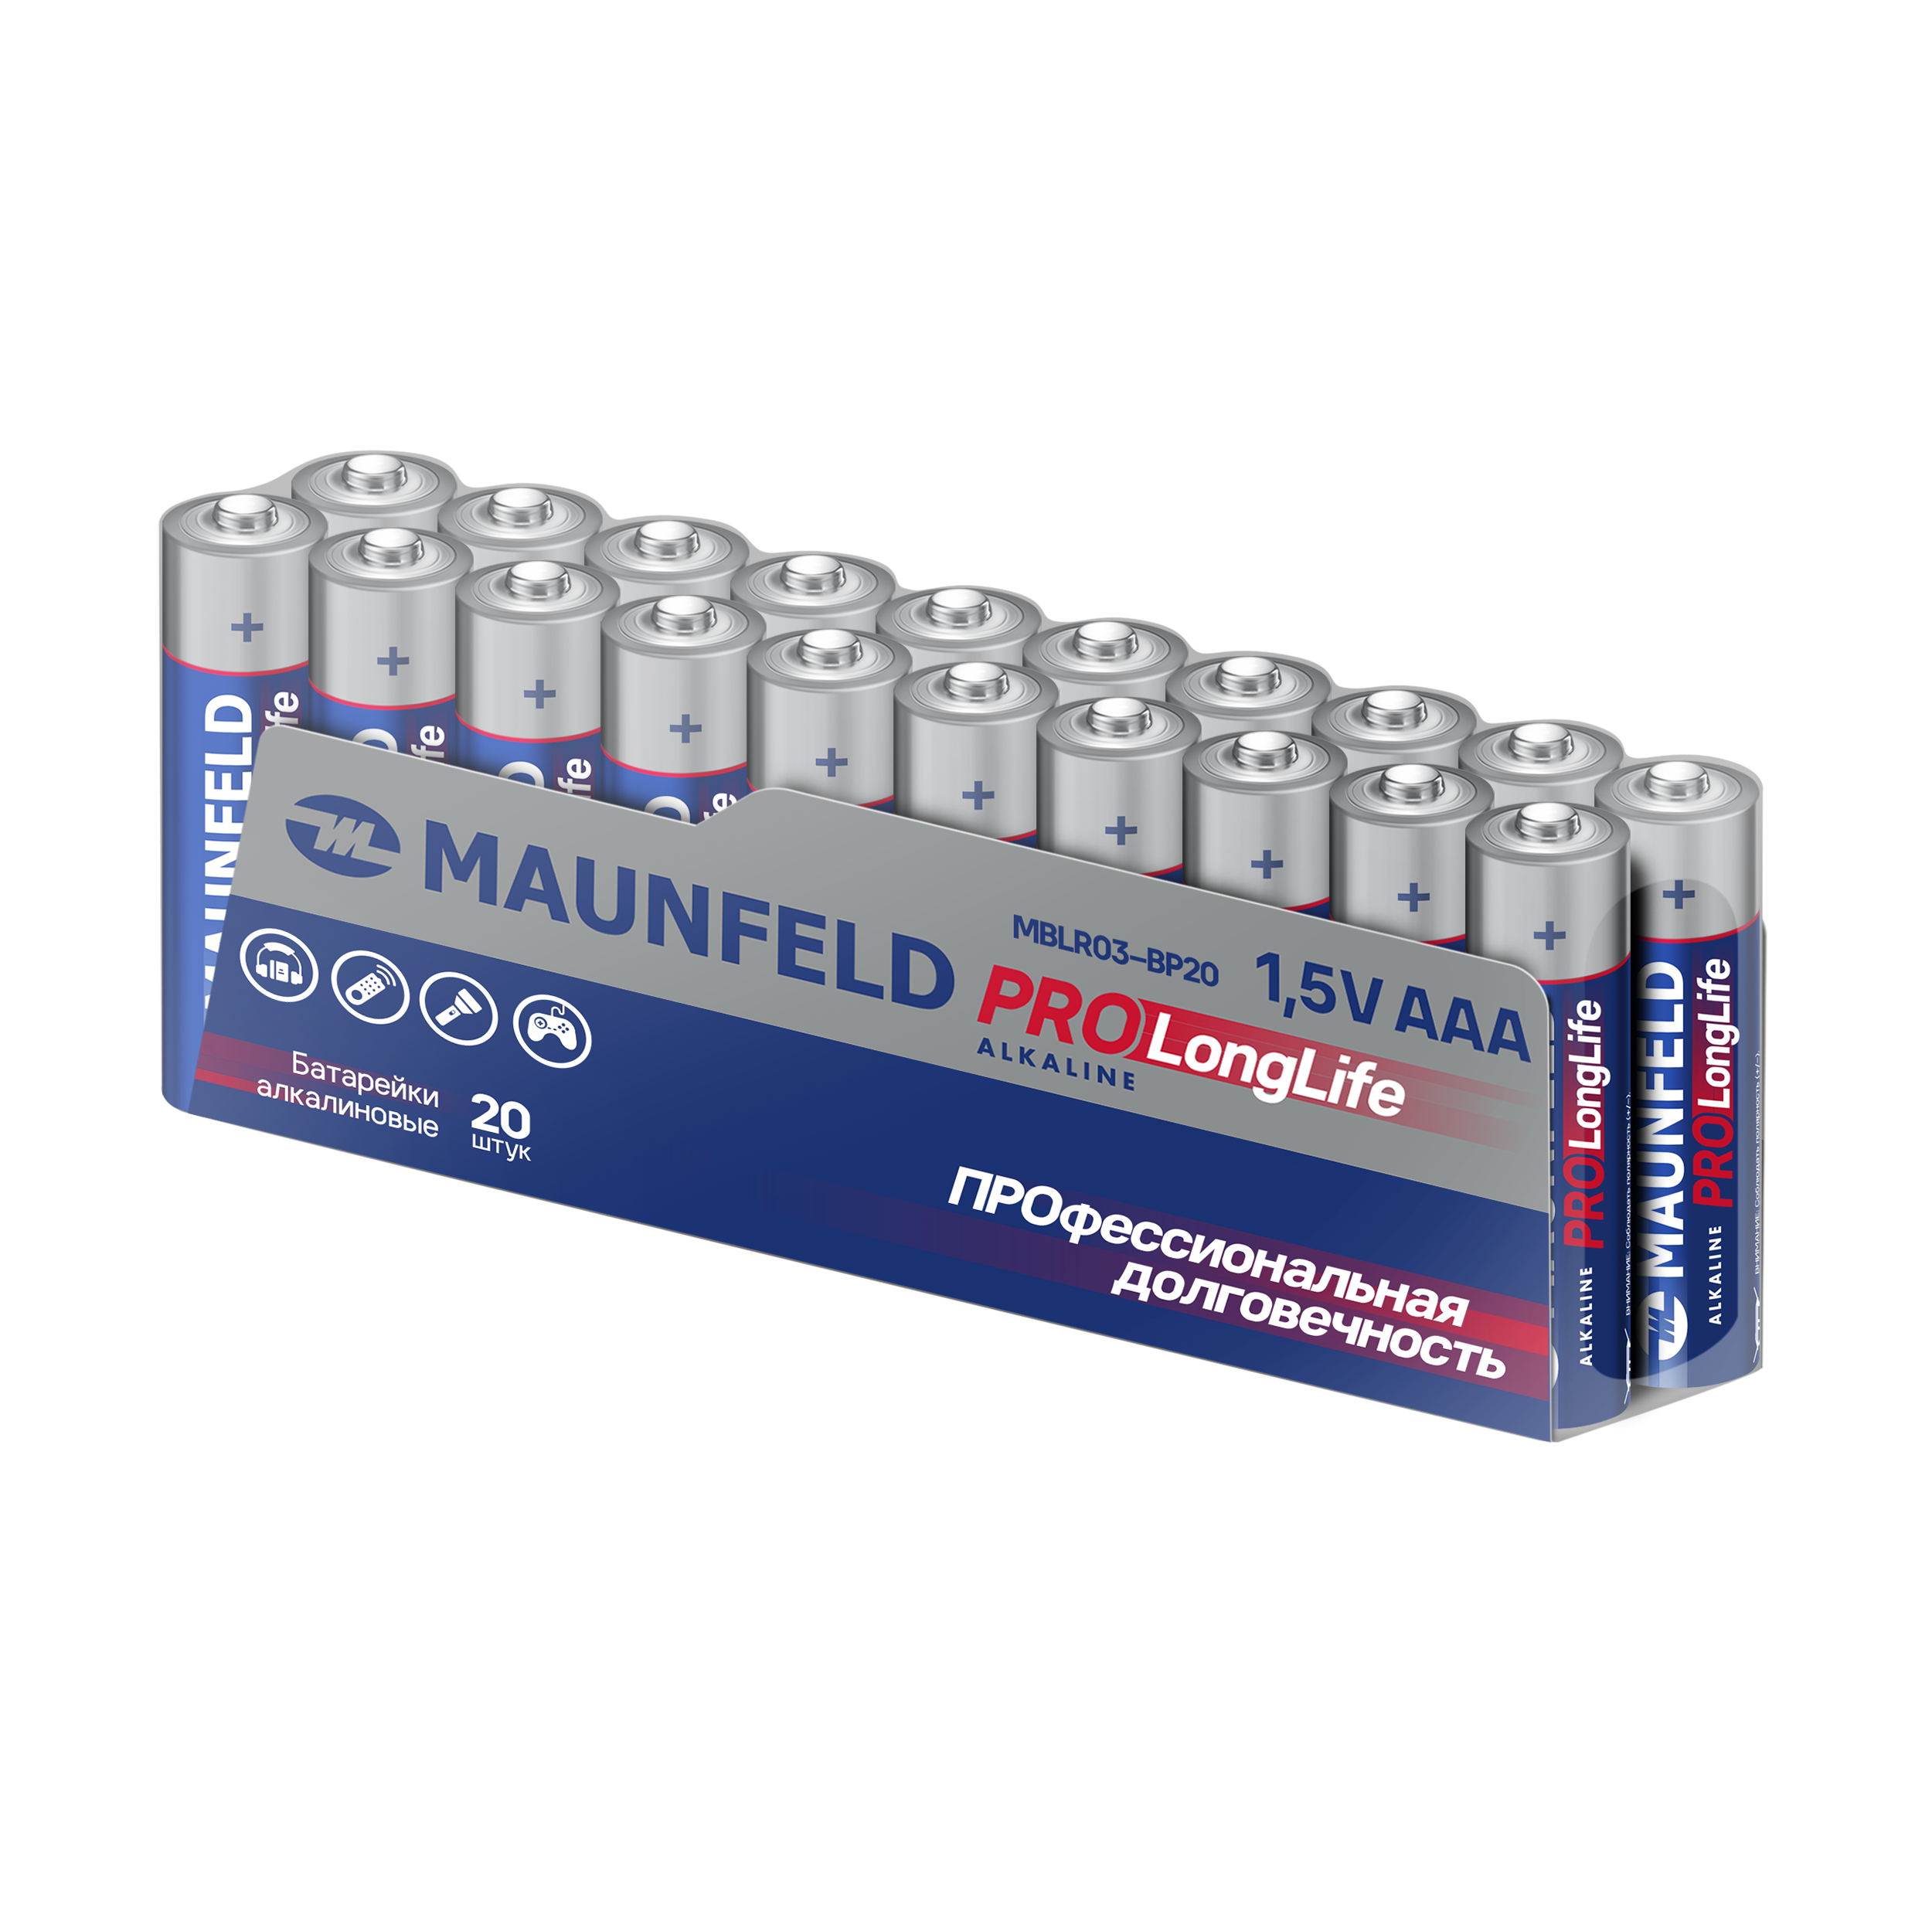 Батарейки MAUNFELD PRO Long Life Alkaline ААА(LR03) MBLR03-PB20, упаковка 20 шт.